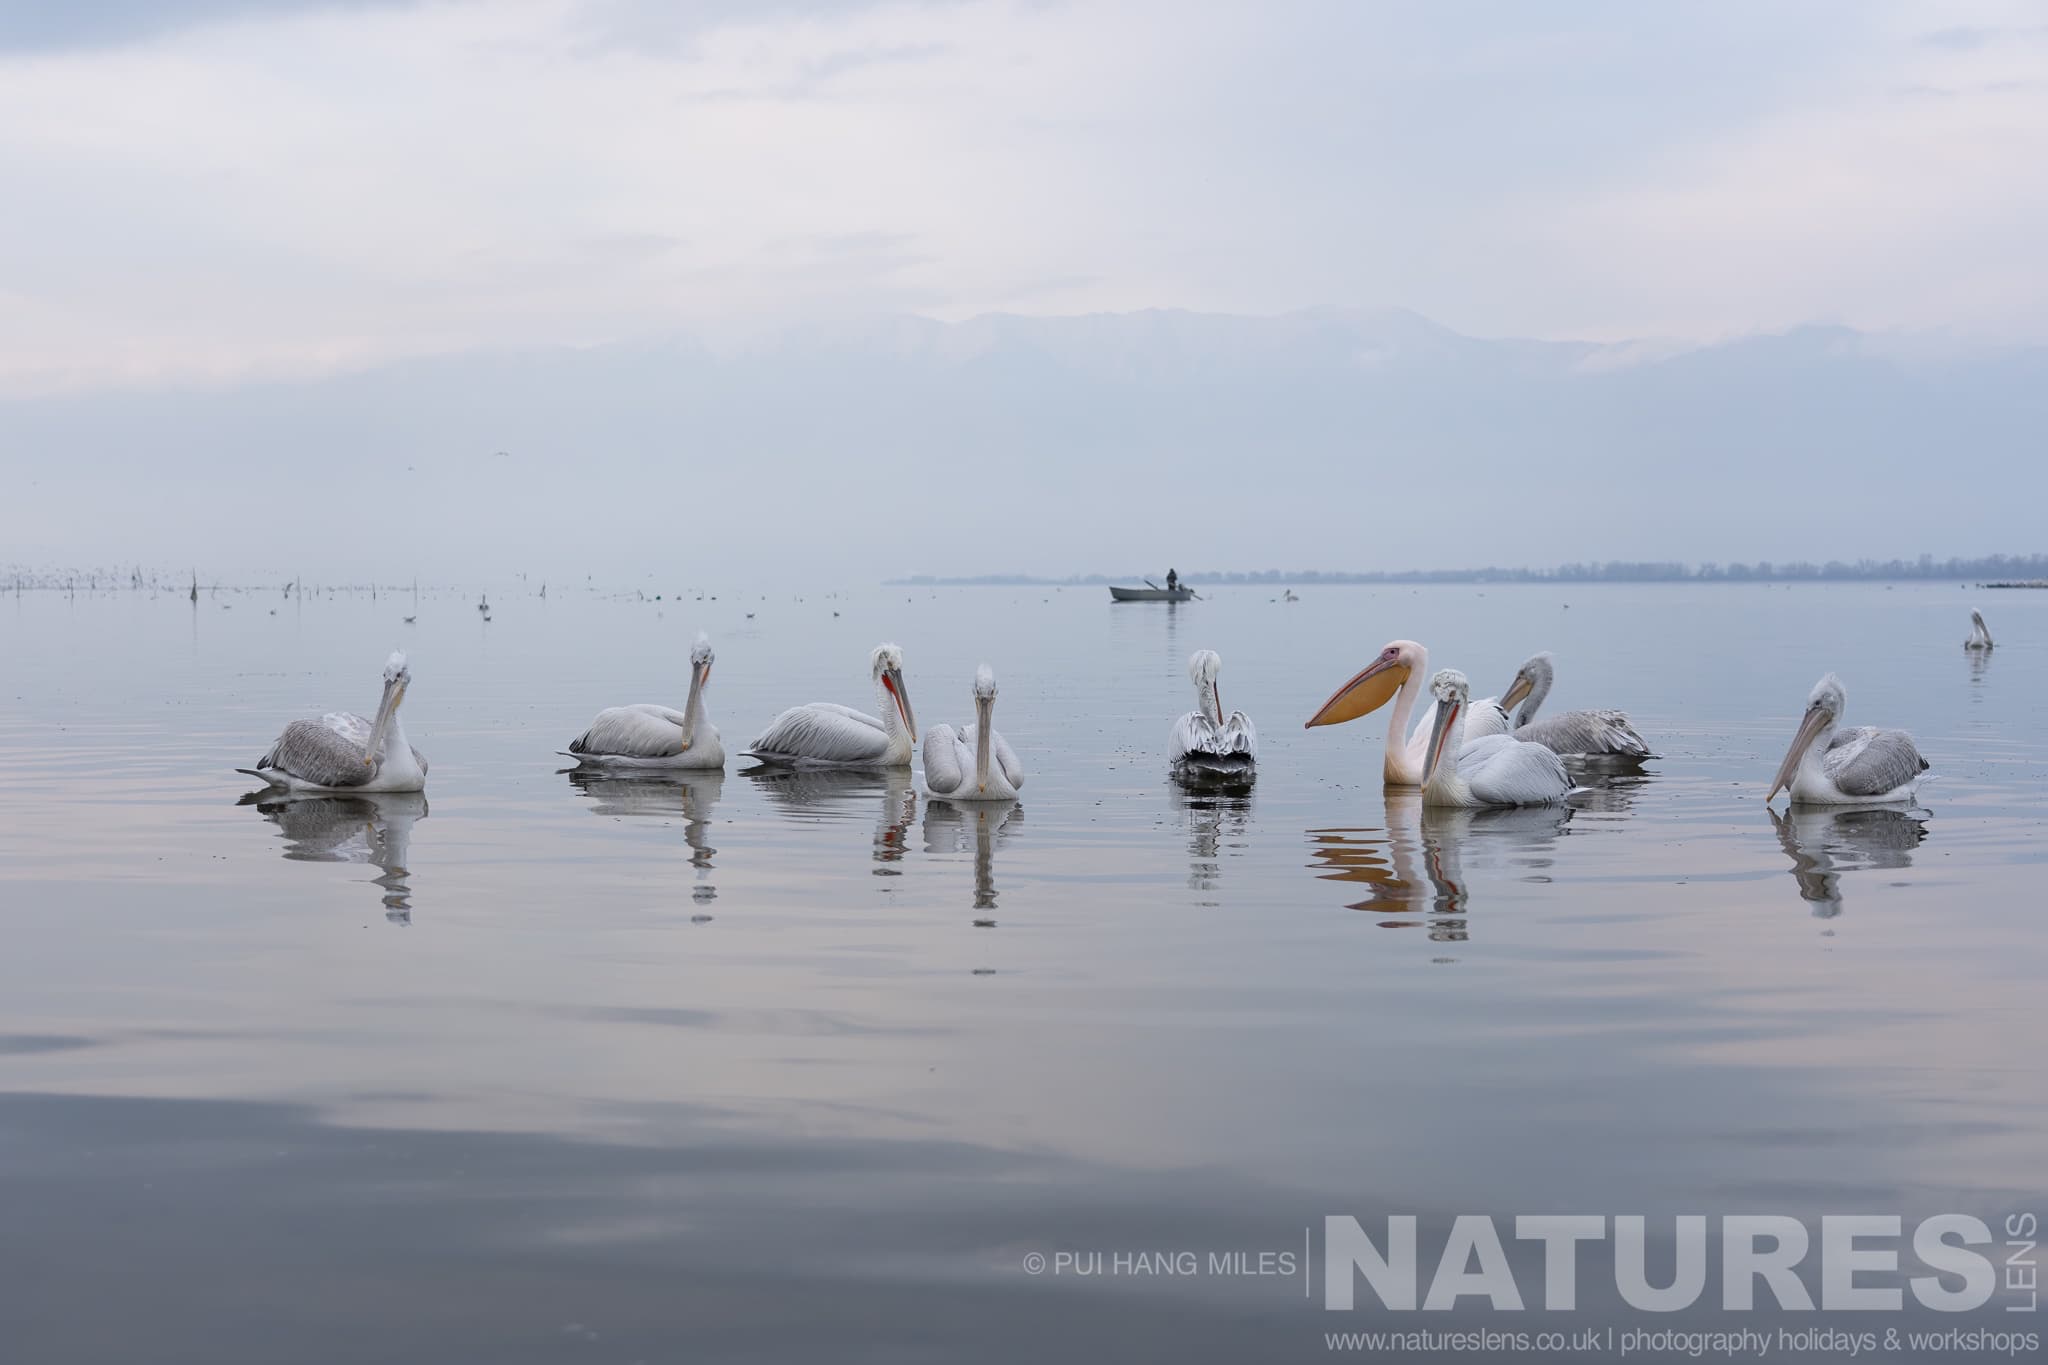 A Group Of The Pelicans Of Lake Kerkini Drifting On The Waters Of Lake Kerkini